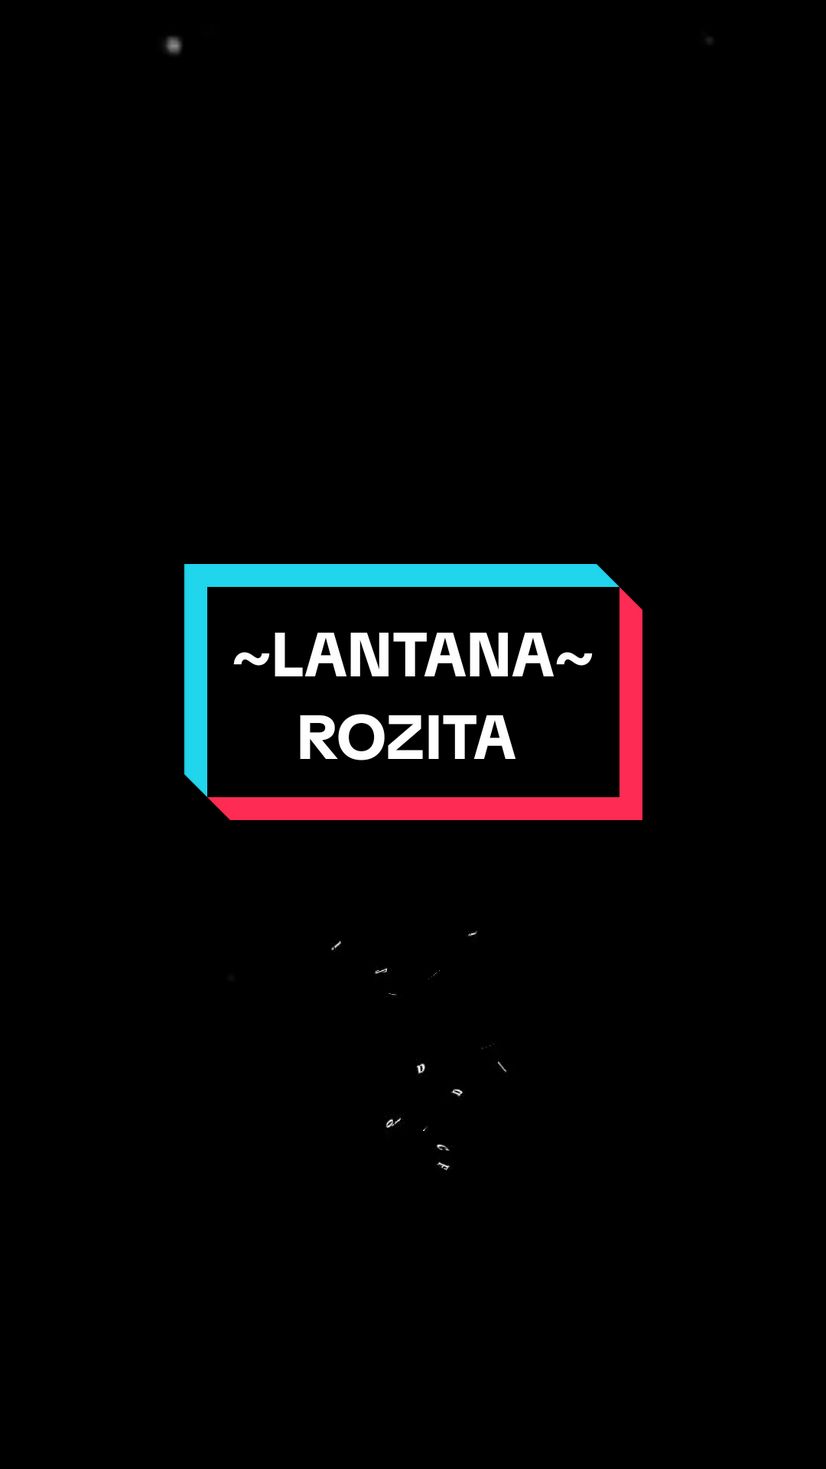 LANTANA | ROZITA... #lantana #rozita #laguviral #lagurock #lagurockmelayu #lagumelayu #lagumelayuterbaik #music #musicrock #musicvideo #trending #trendingsong #trendingvideo #tiktokmalaysia #tiktokindonesia #tiktokthailand #tiktokbrunei #tiktoksingapore #lirik #lyrics #liriklagu #lyrics_songs #lyricsvideo #fulllyrics #fullsong #lagupenuh #lirikpenuh #fyp #fypシ #fypシ゚viral #fypage #fypagee #fypageeeee #foryou #fypp #foryoupage #foryourpage #fyppp #fyppppppppppppppppppppppp 